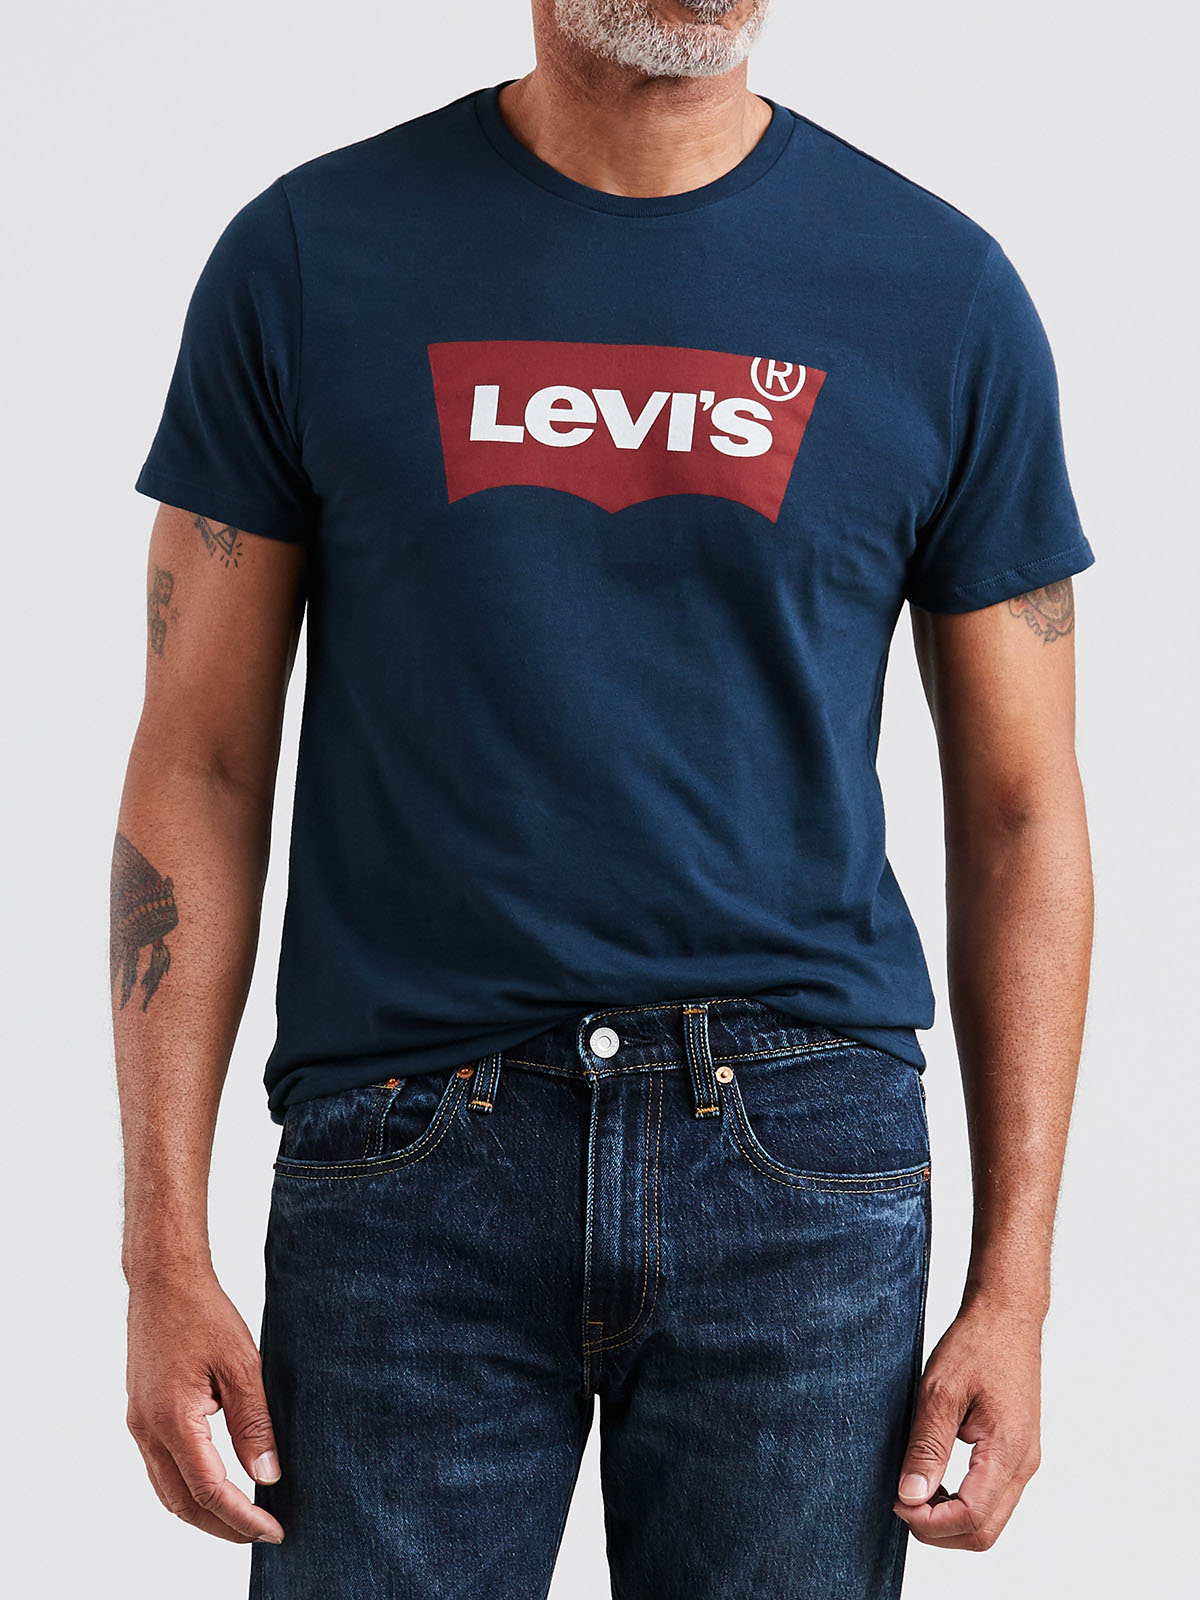 Levi's samarreta logo màniga curta d'home 17783-0139 blau marí